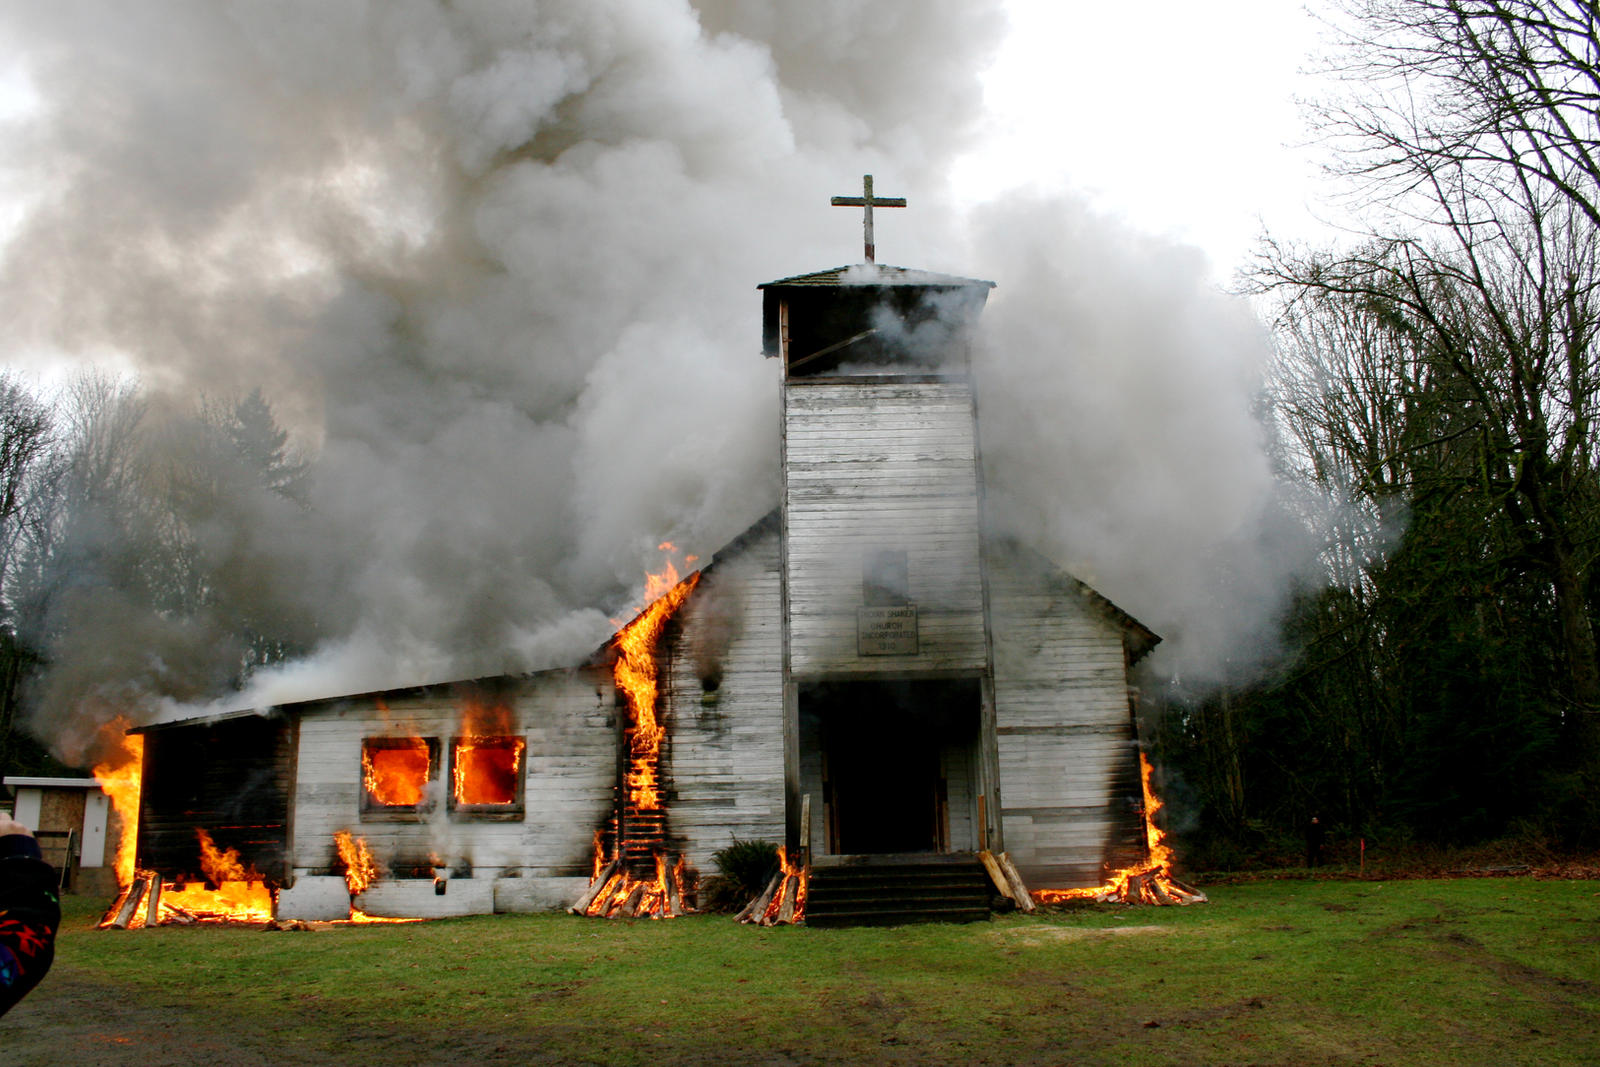 shaker_church_burning_by_alostfraggle-d2yupr6.jpg